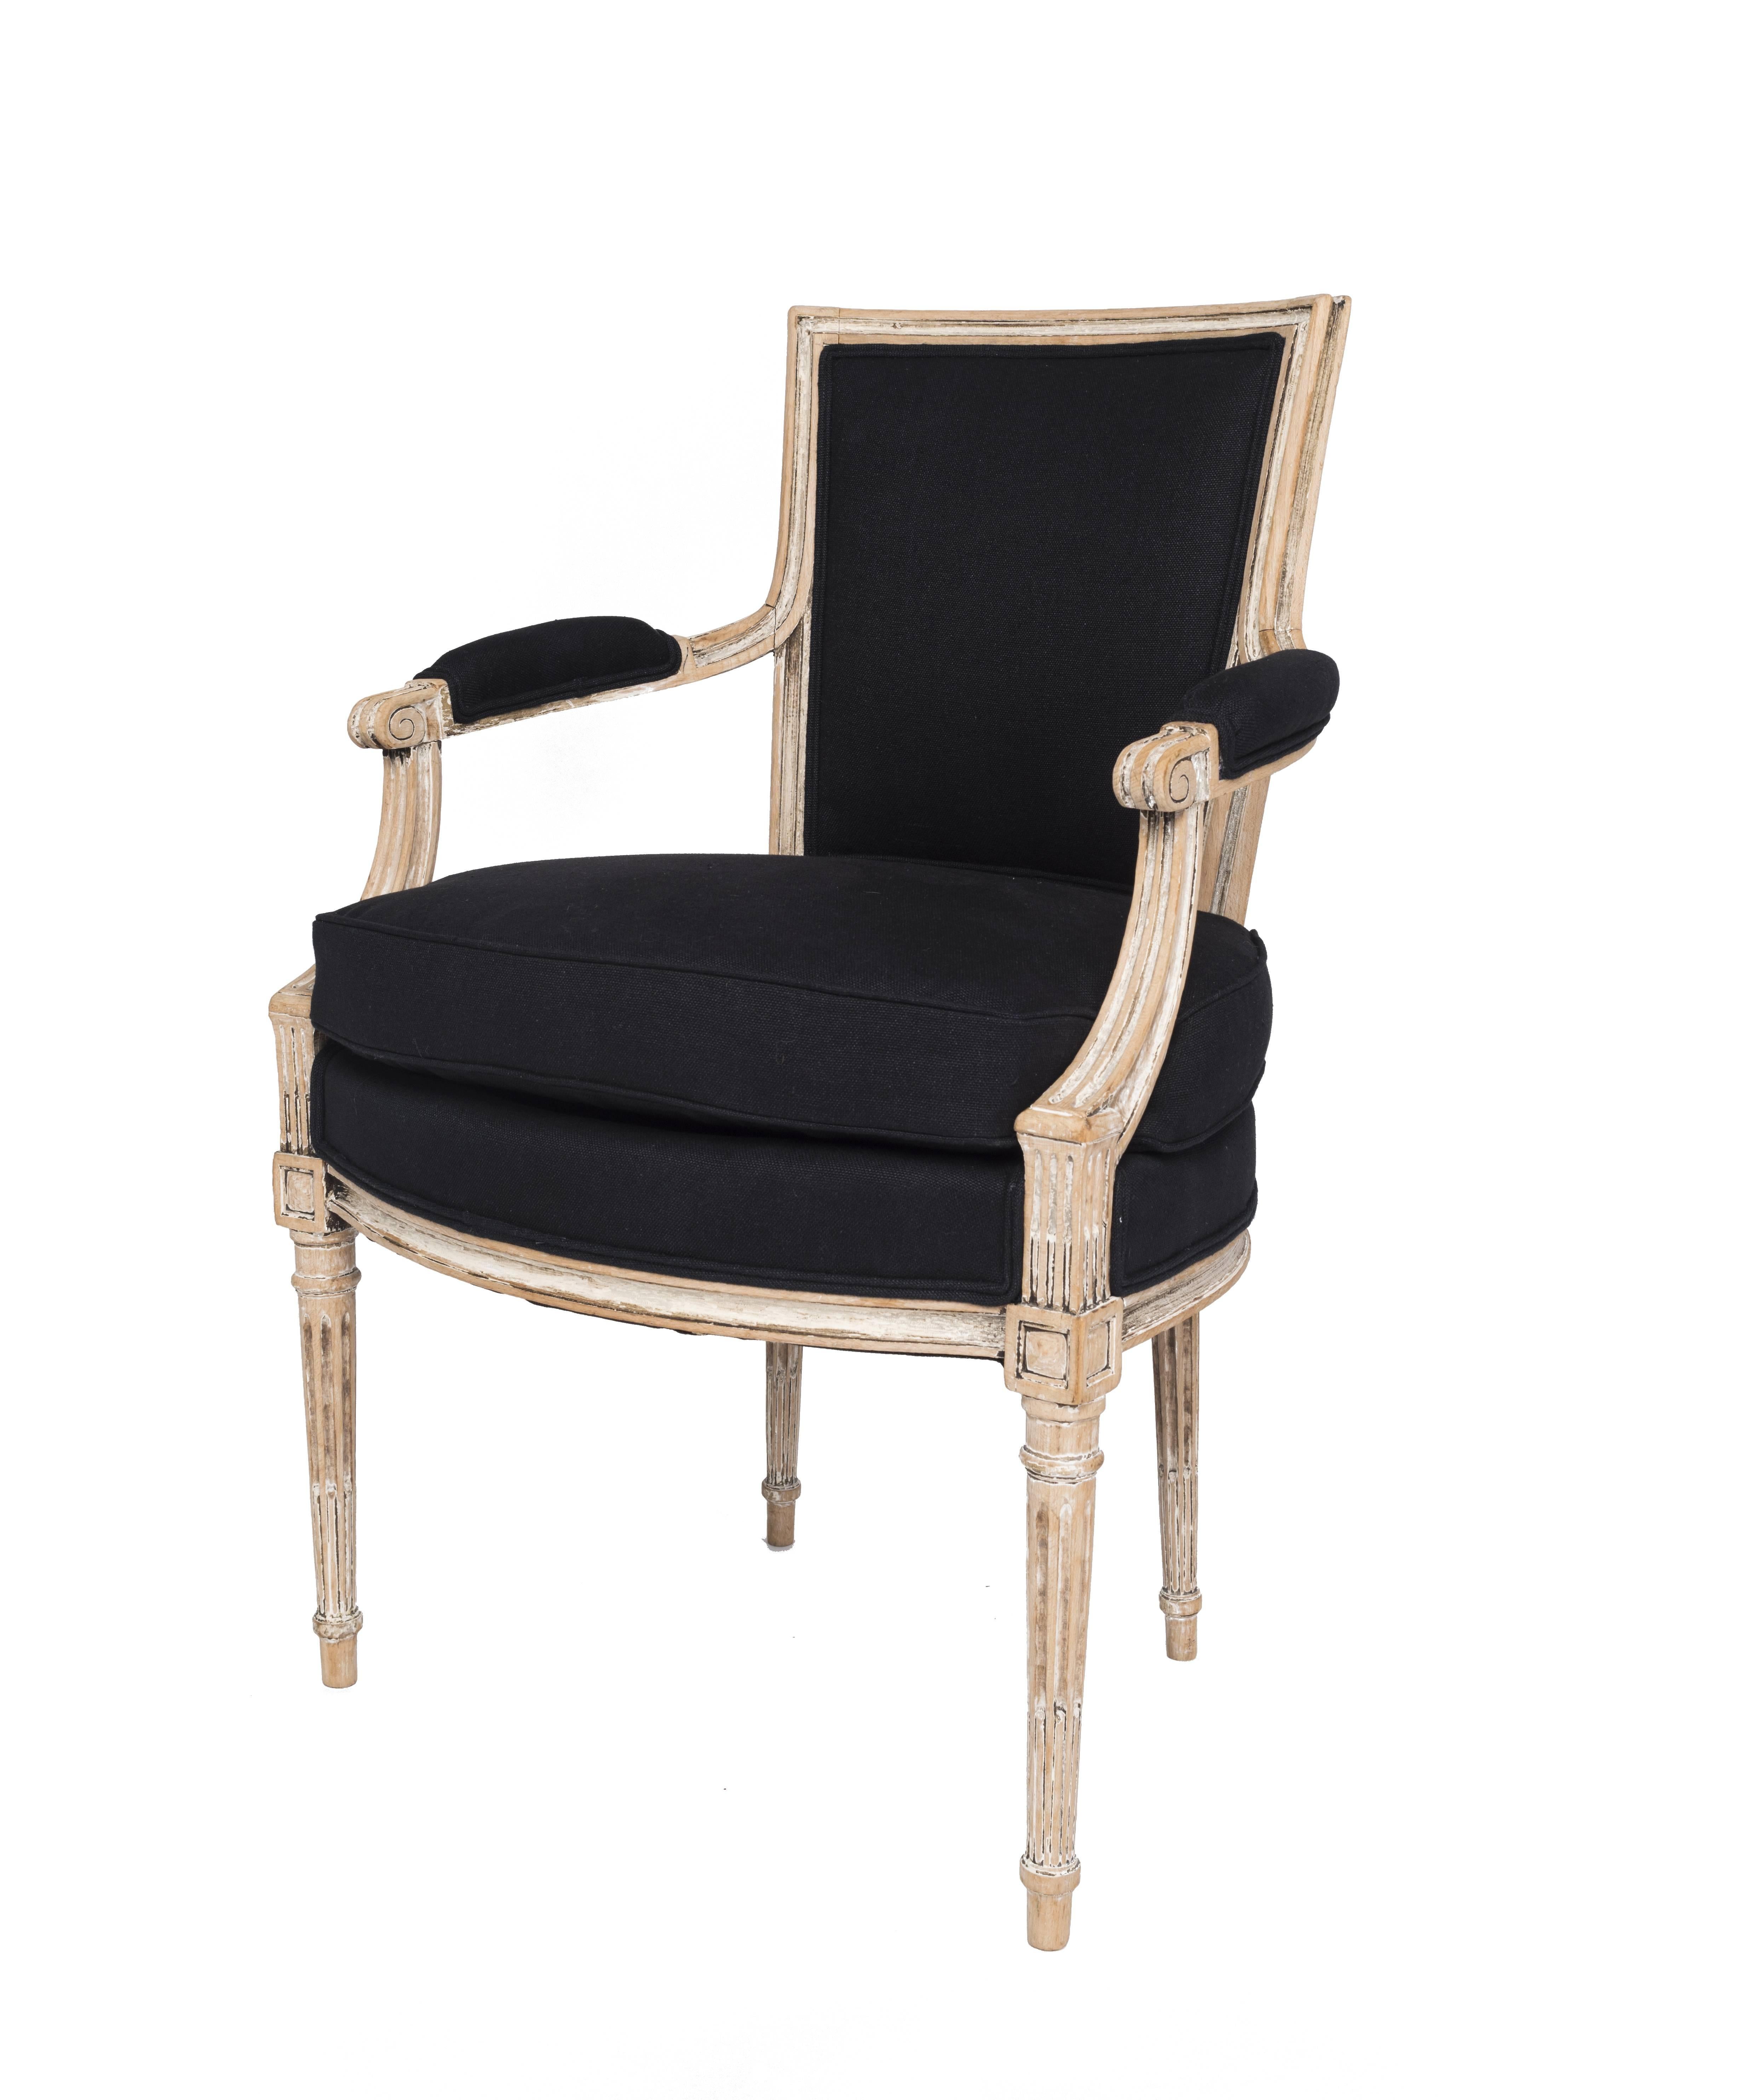 Beautiful Louis XVI chairs,
circa 1820.
Reupholstered in black linen.
   